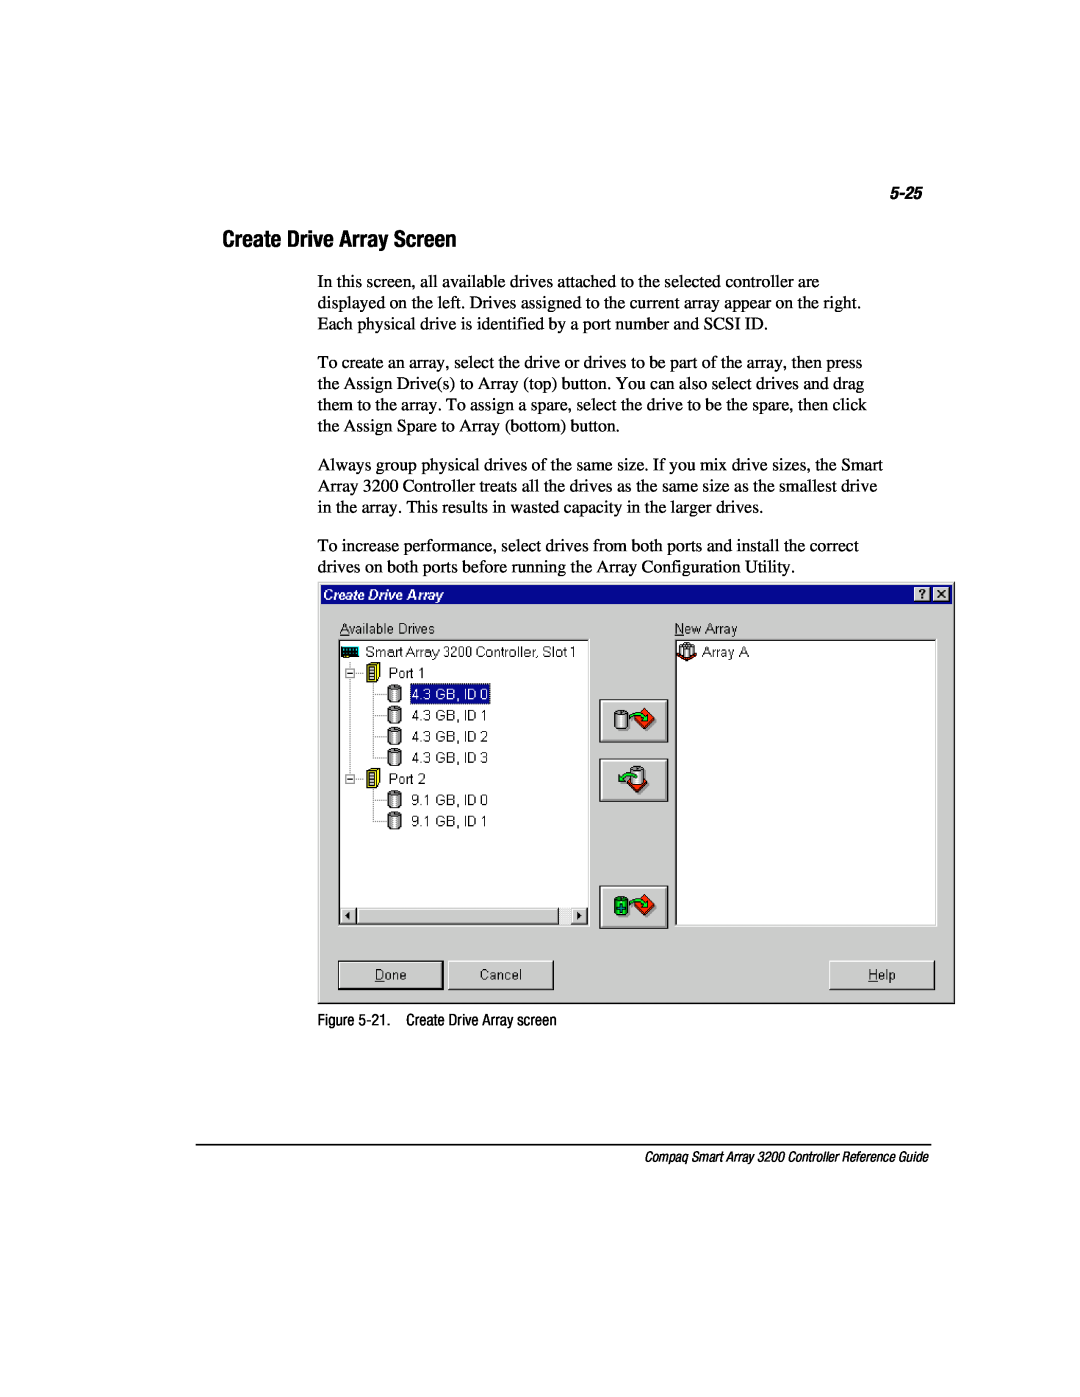 Compaq 3200 manual Create Drive Array Screen, 5-25, 21. Create Drive Array screen 